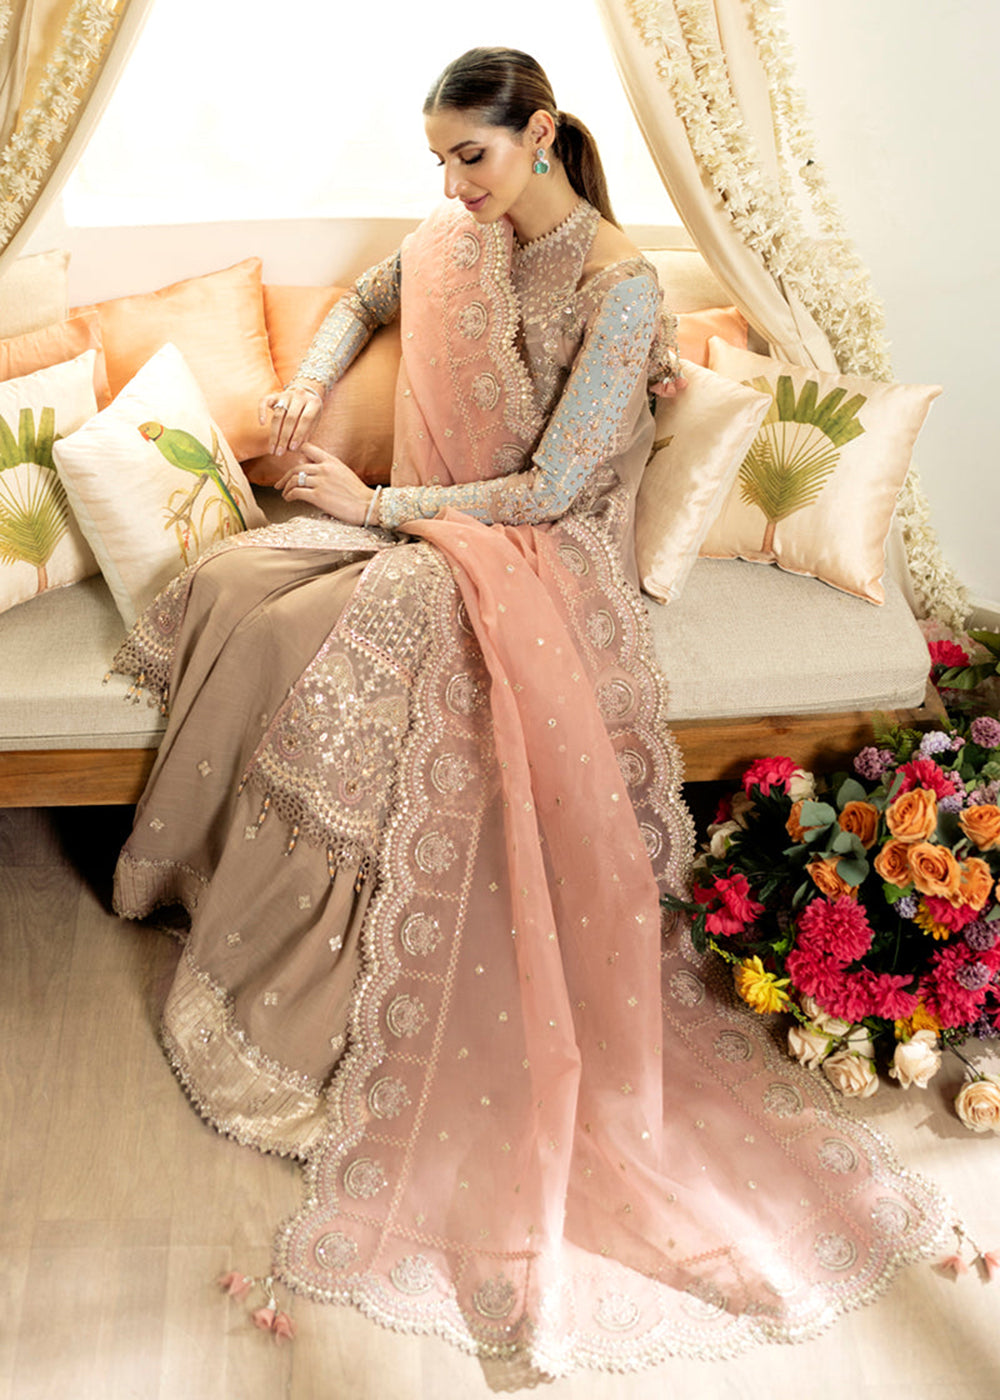 Buy Now Dilnaaz Wedding Formals 2023 by Qalamkar | DN-08 - INAYAA Online in USA, UK, Canada & Worldwide at Empress Clothing. 